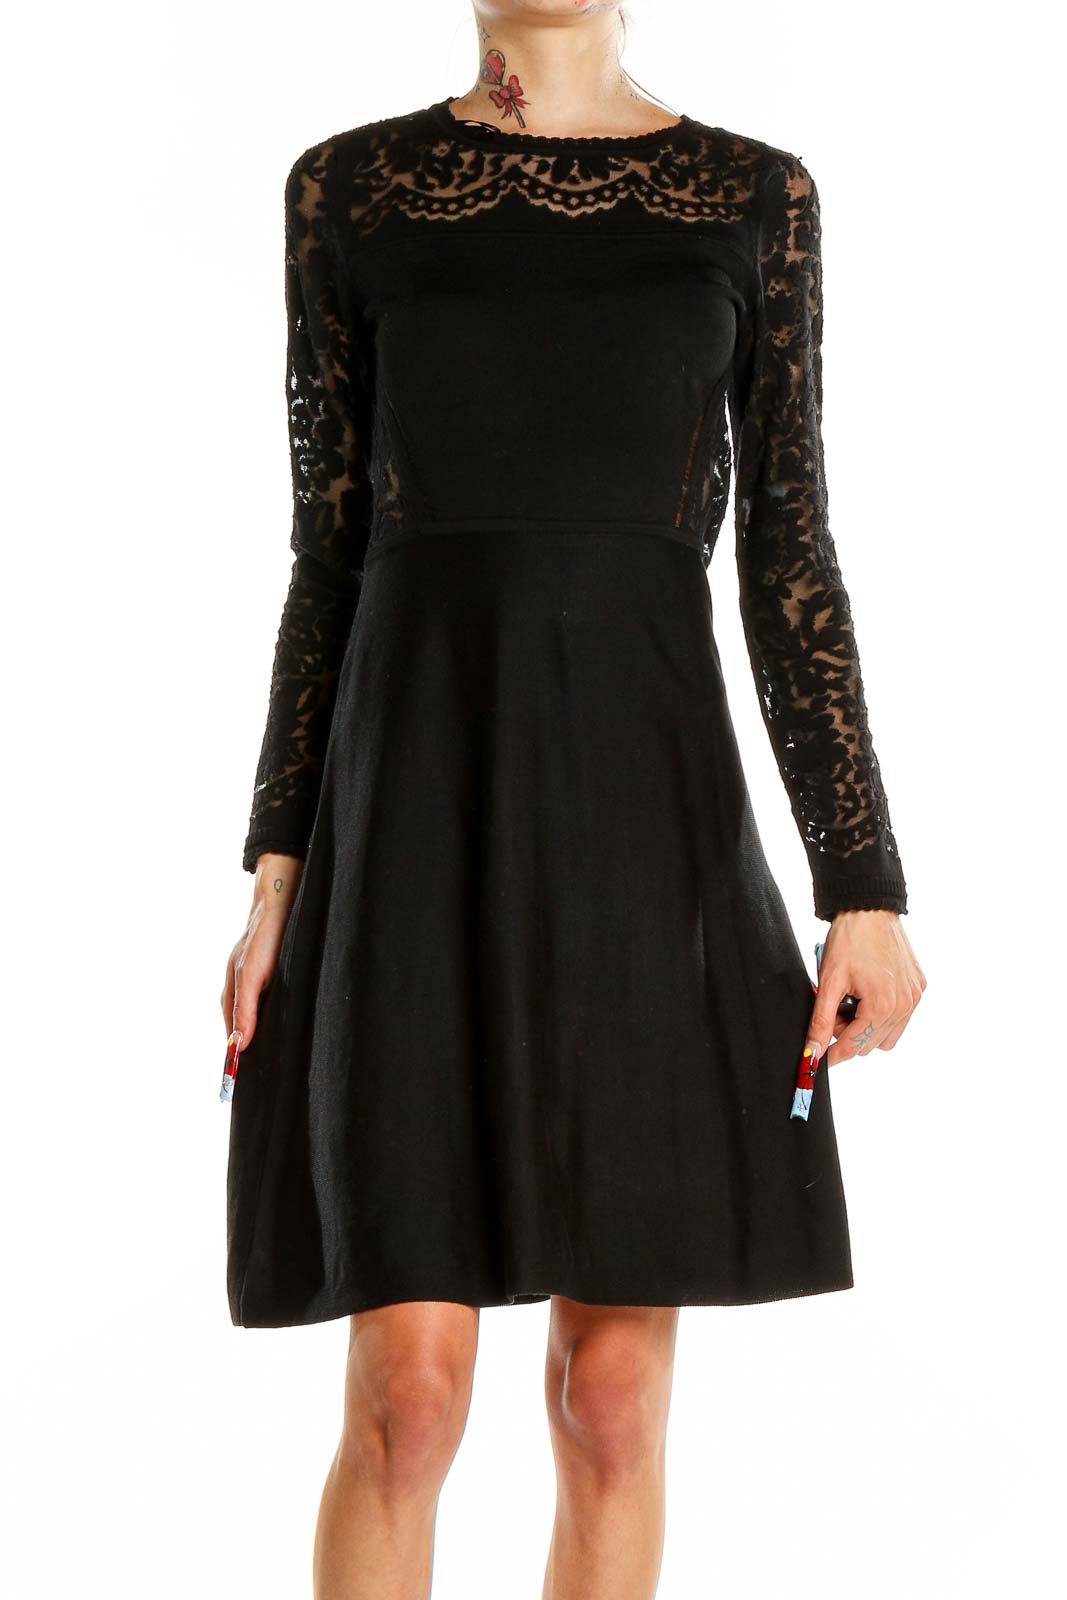 Black Lace Long Sleeve A-Line Dress Front